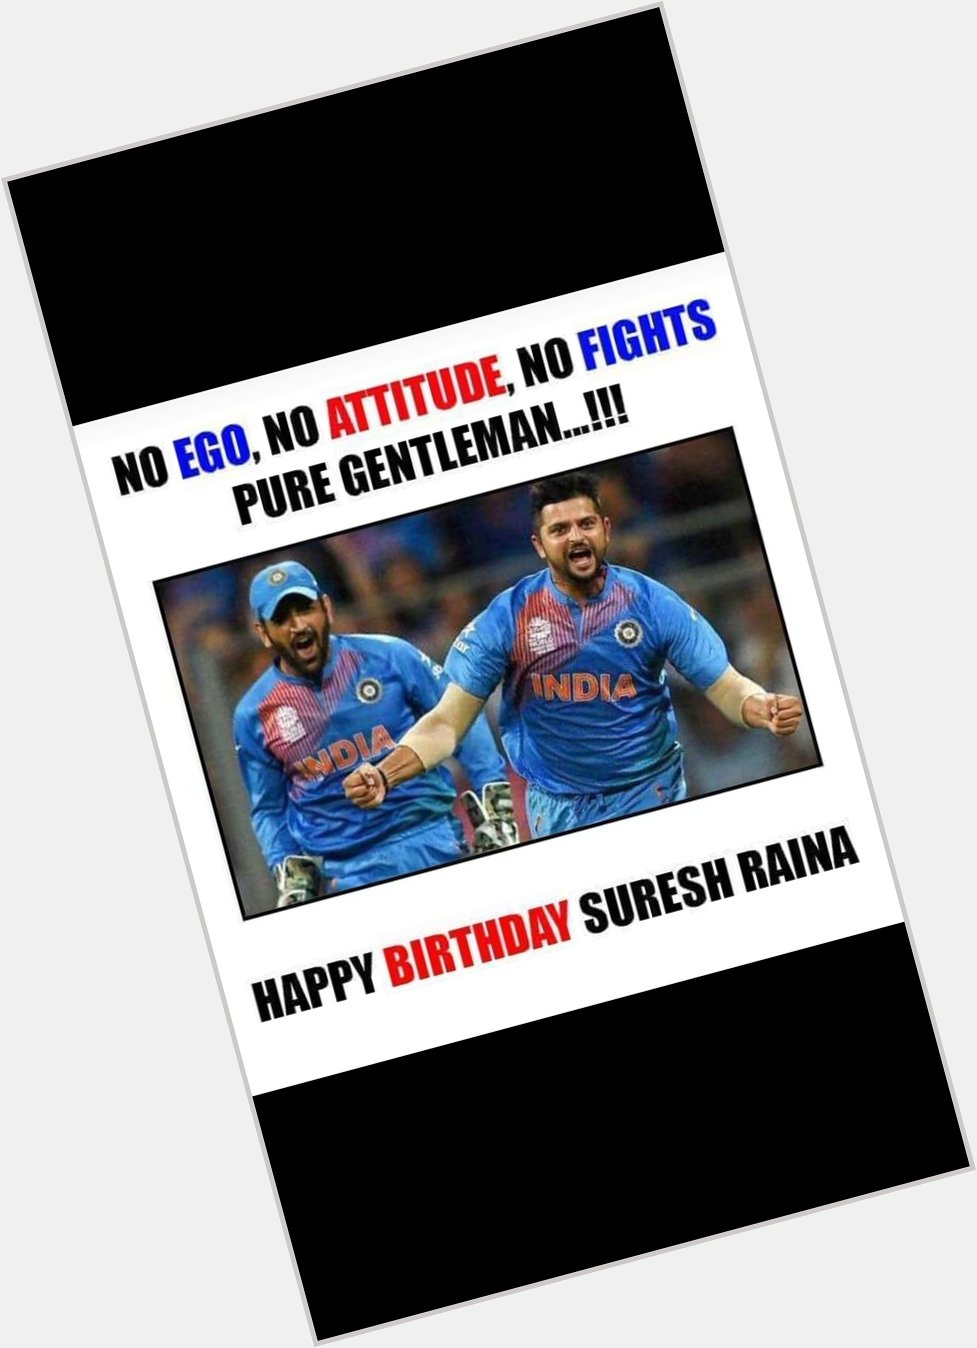 Happy birthday to gentlemen of Indian cricket team suresh Raina 